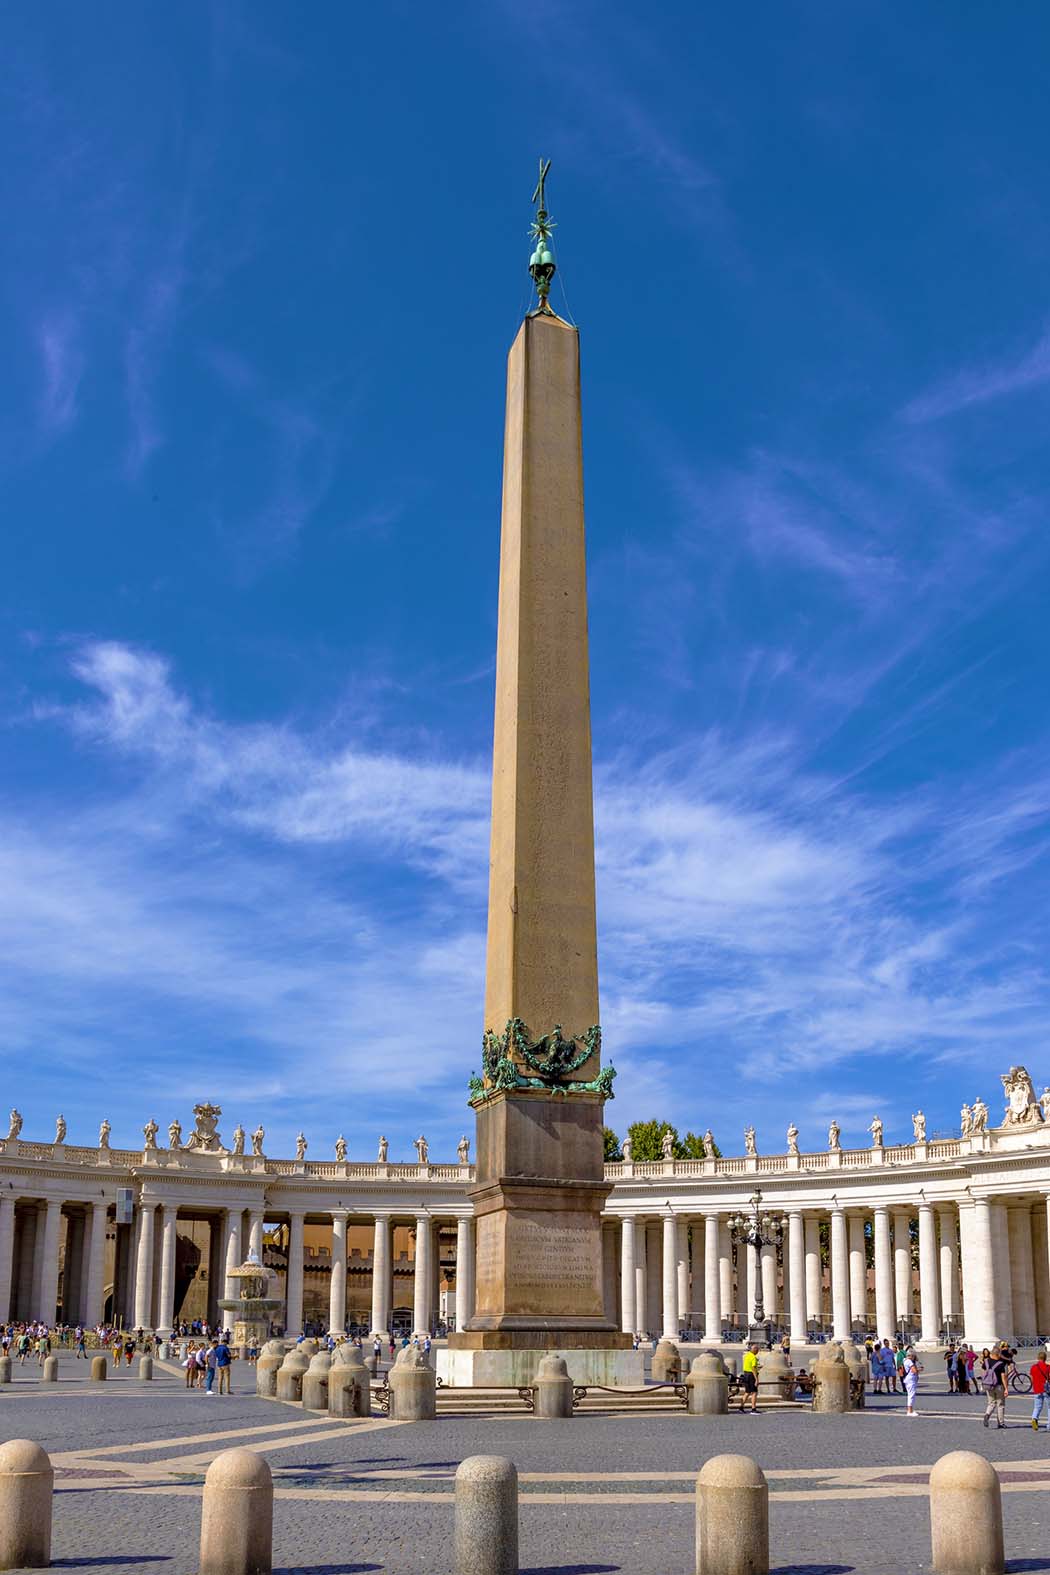 Ancient Egyptian obelisk. Best Photography Spots in Vatican City